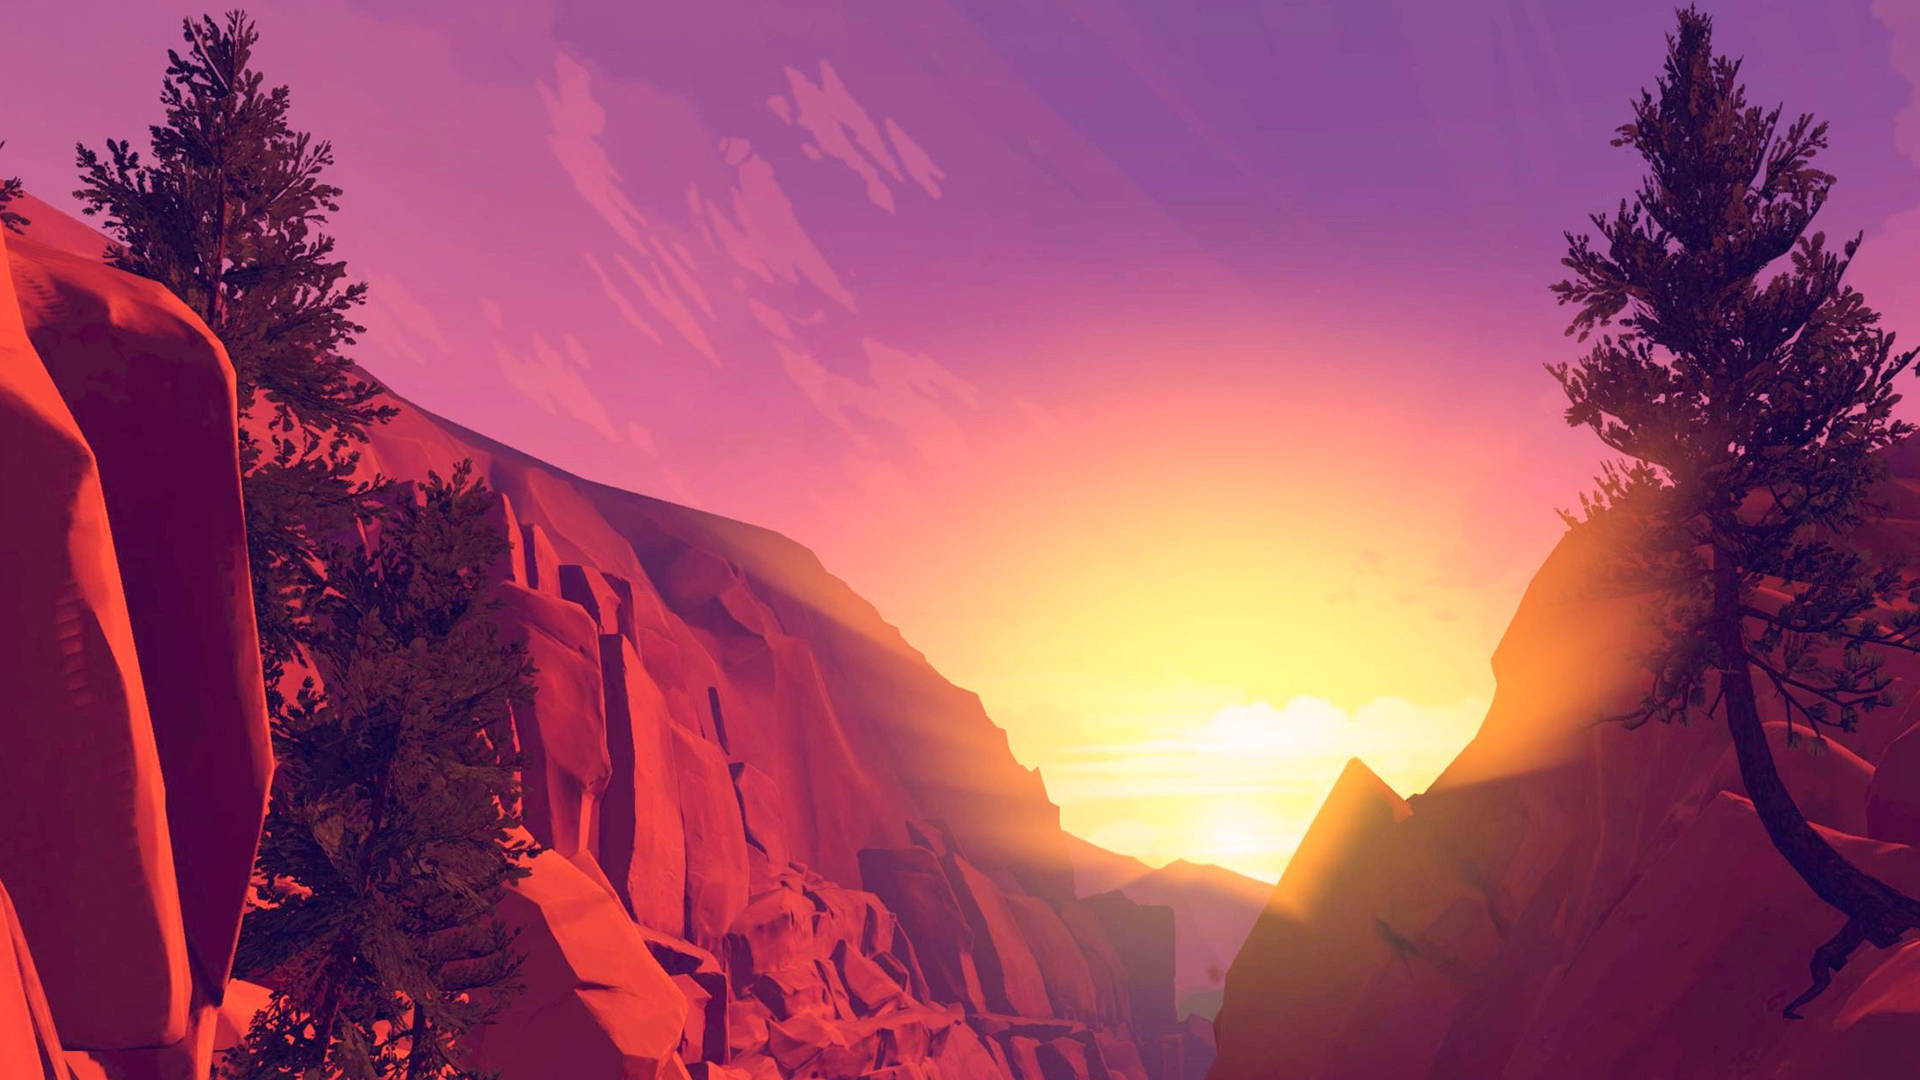 4K Firewatch Sunrise And Purple Sky Wallpaper